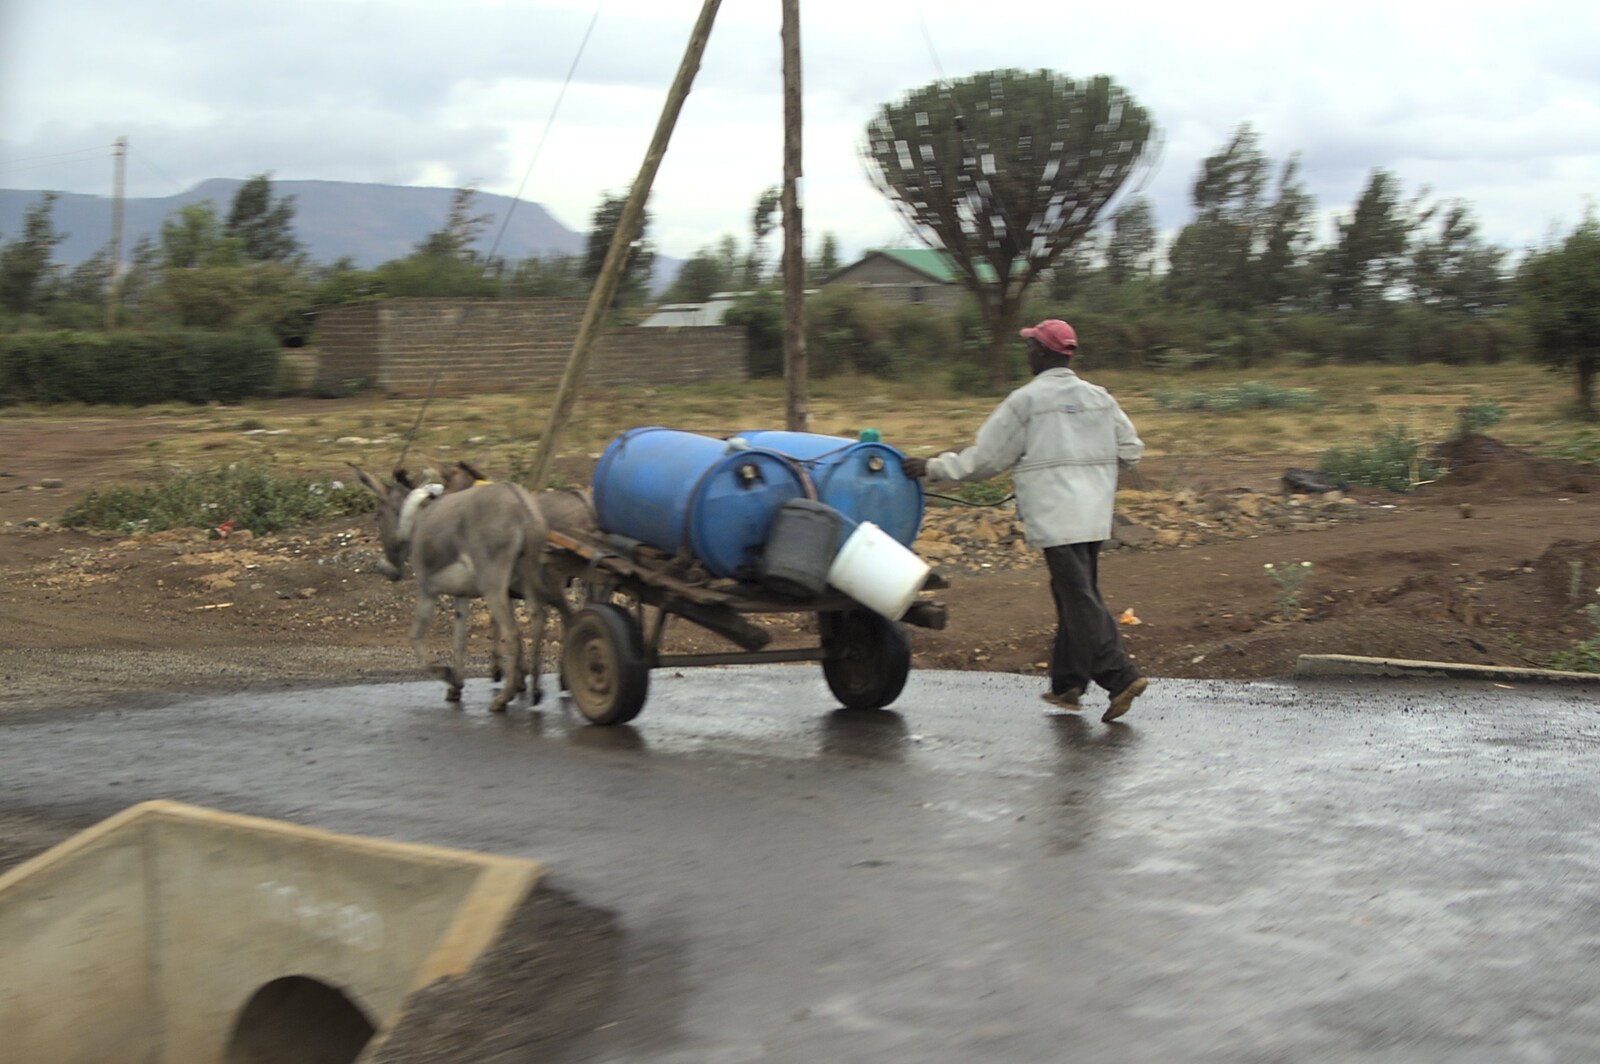 Donkeys haul a cart with some barrels on from Nairobi and the Road to Maasai Mara, Kenya, Africa - 1st November 2010